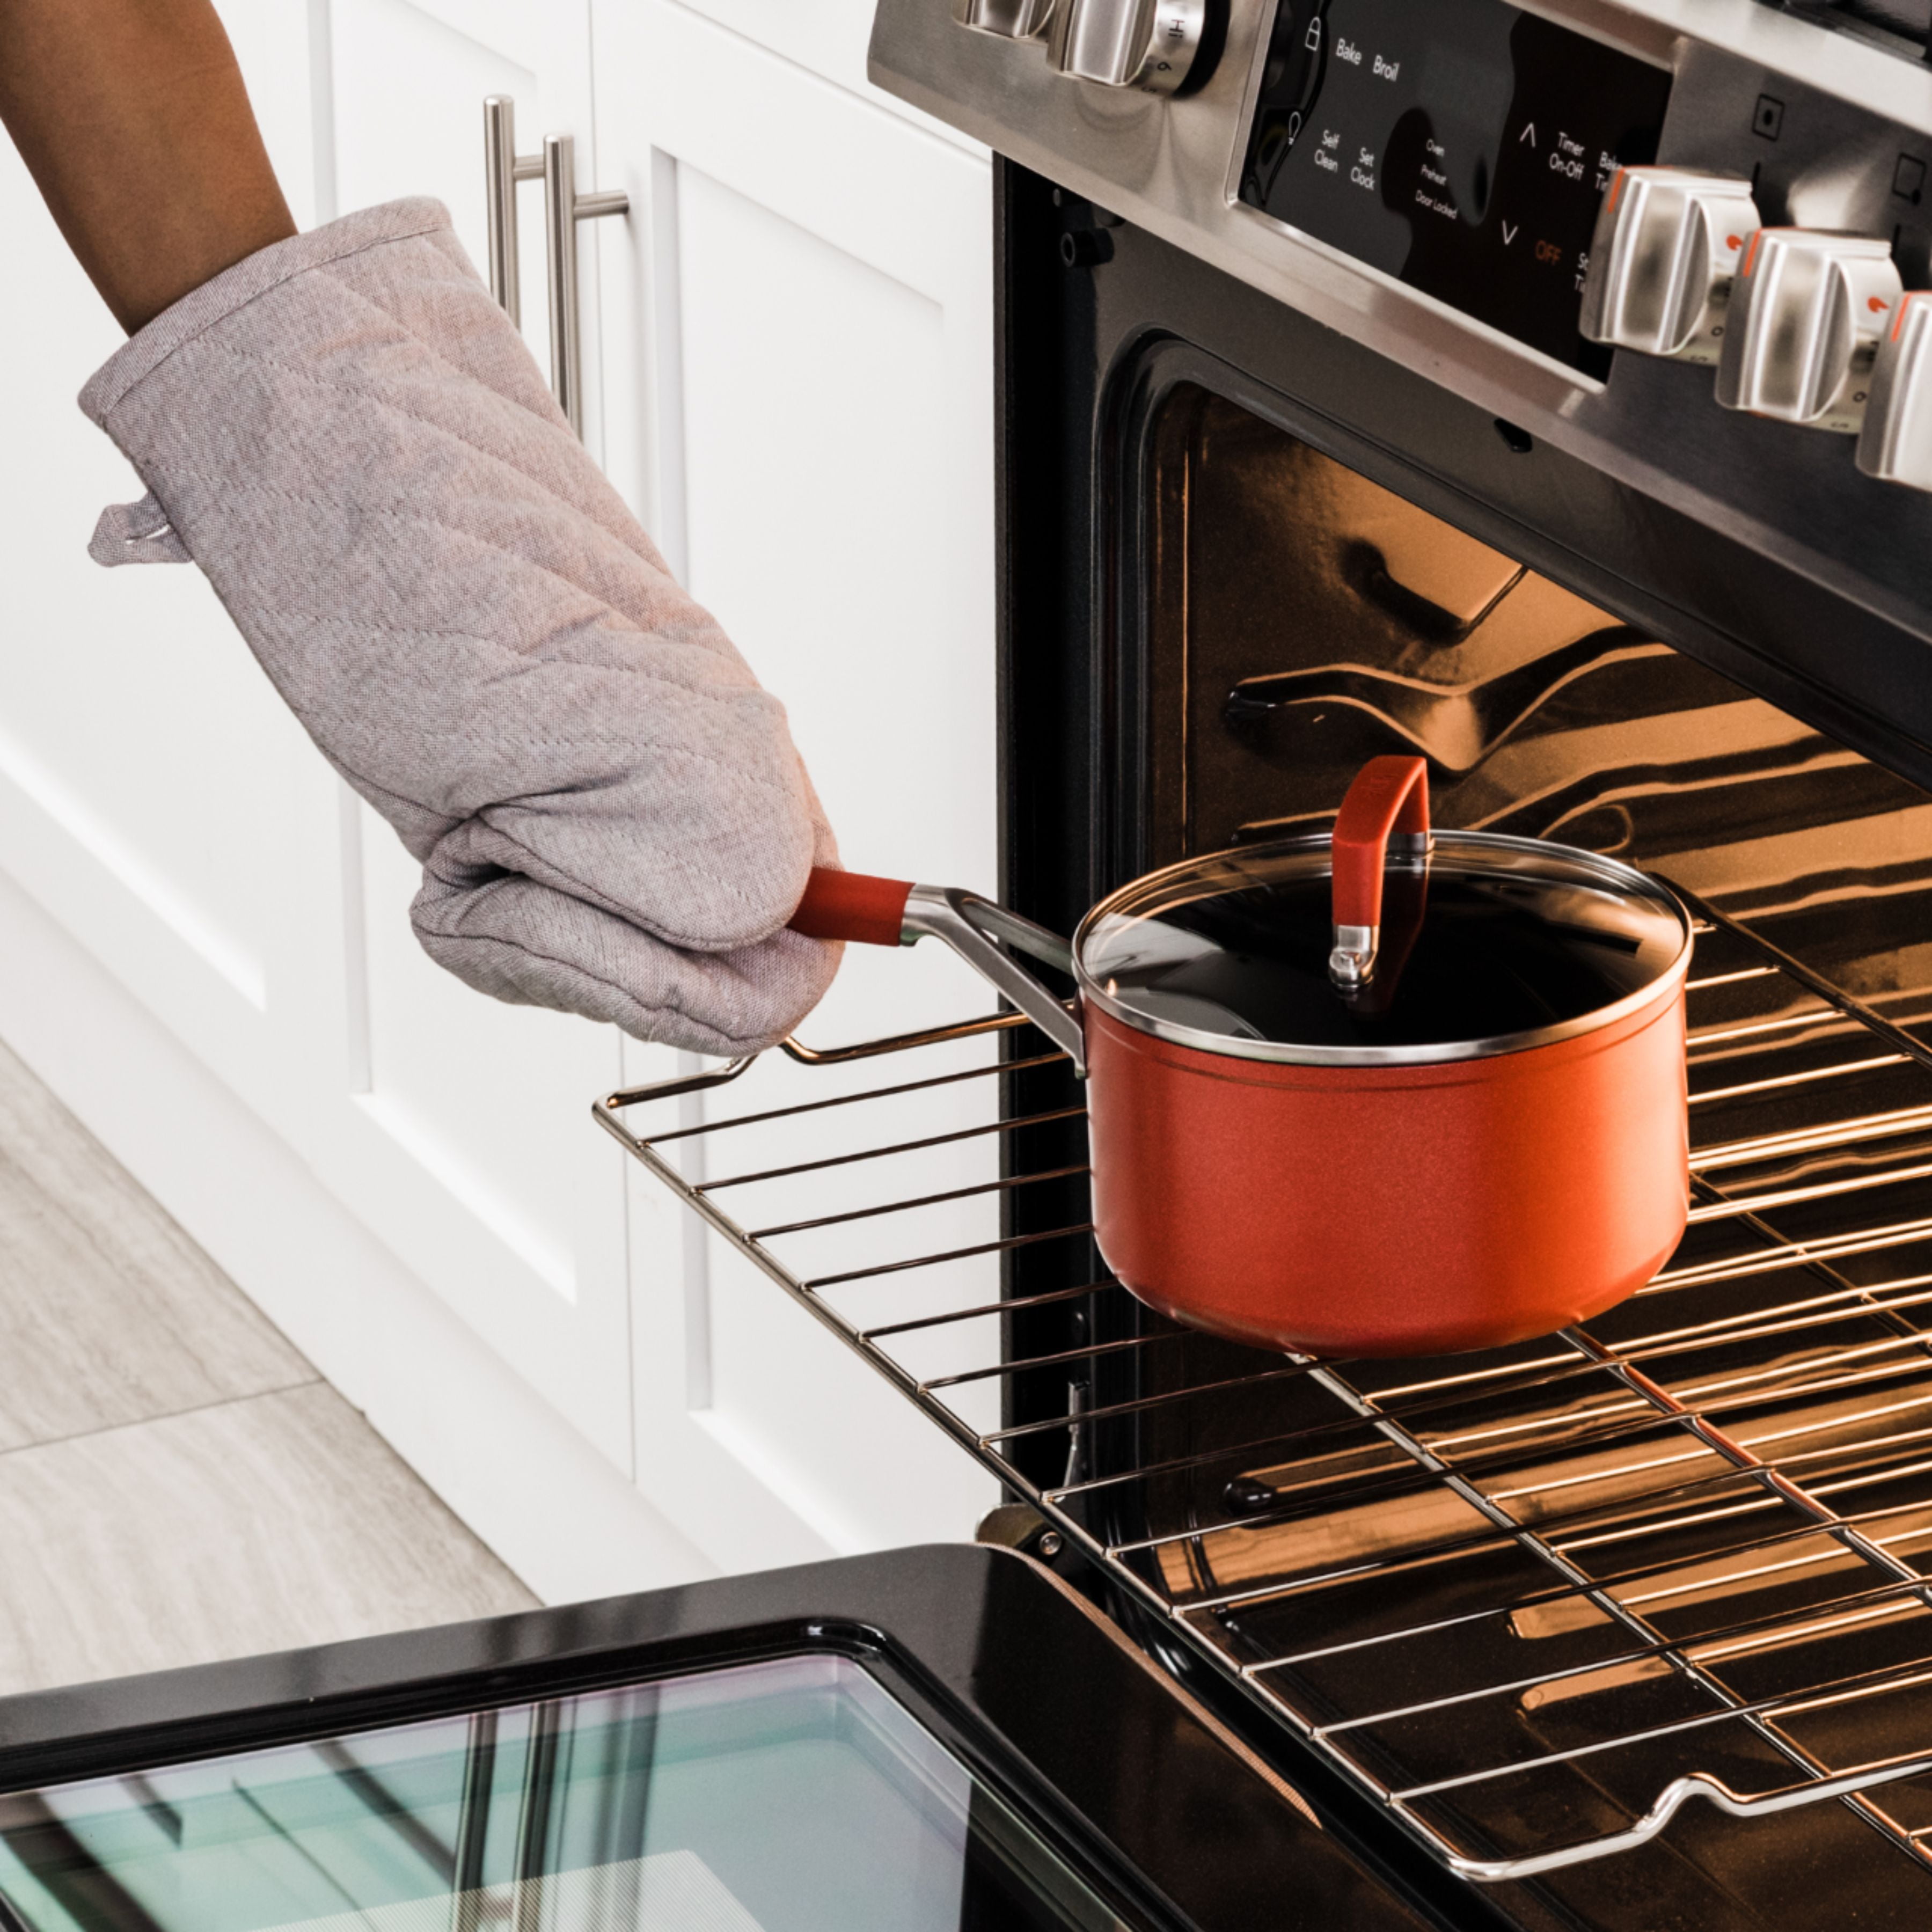 Ninja Foodi Neverstick 1.5-Qt Saucepan with Glass Lid Oven Safe Crimson Red  New